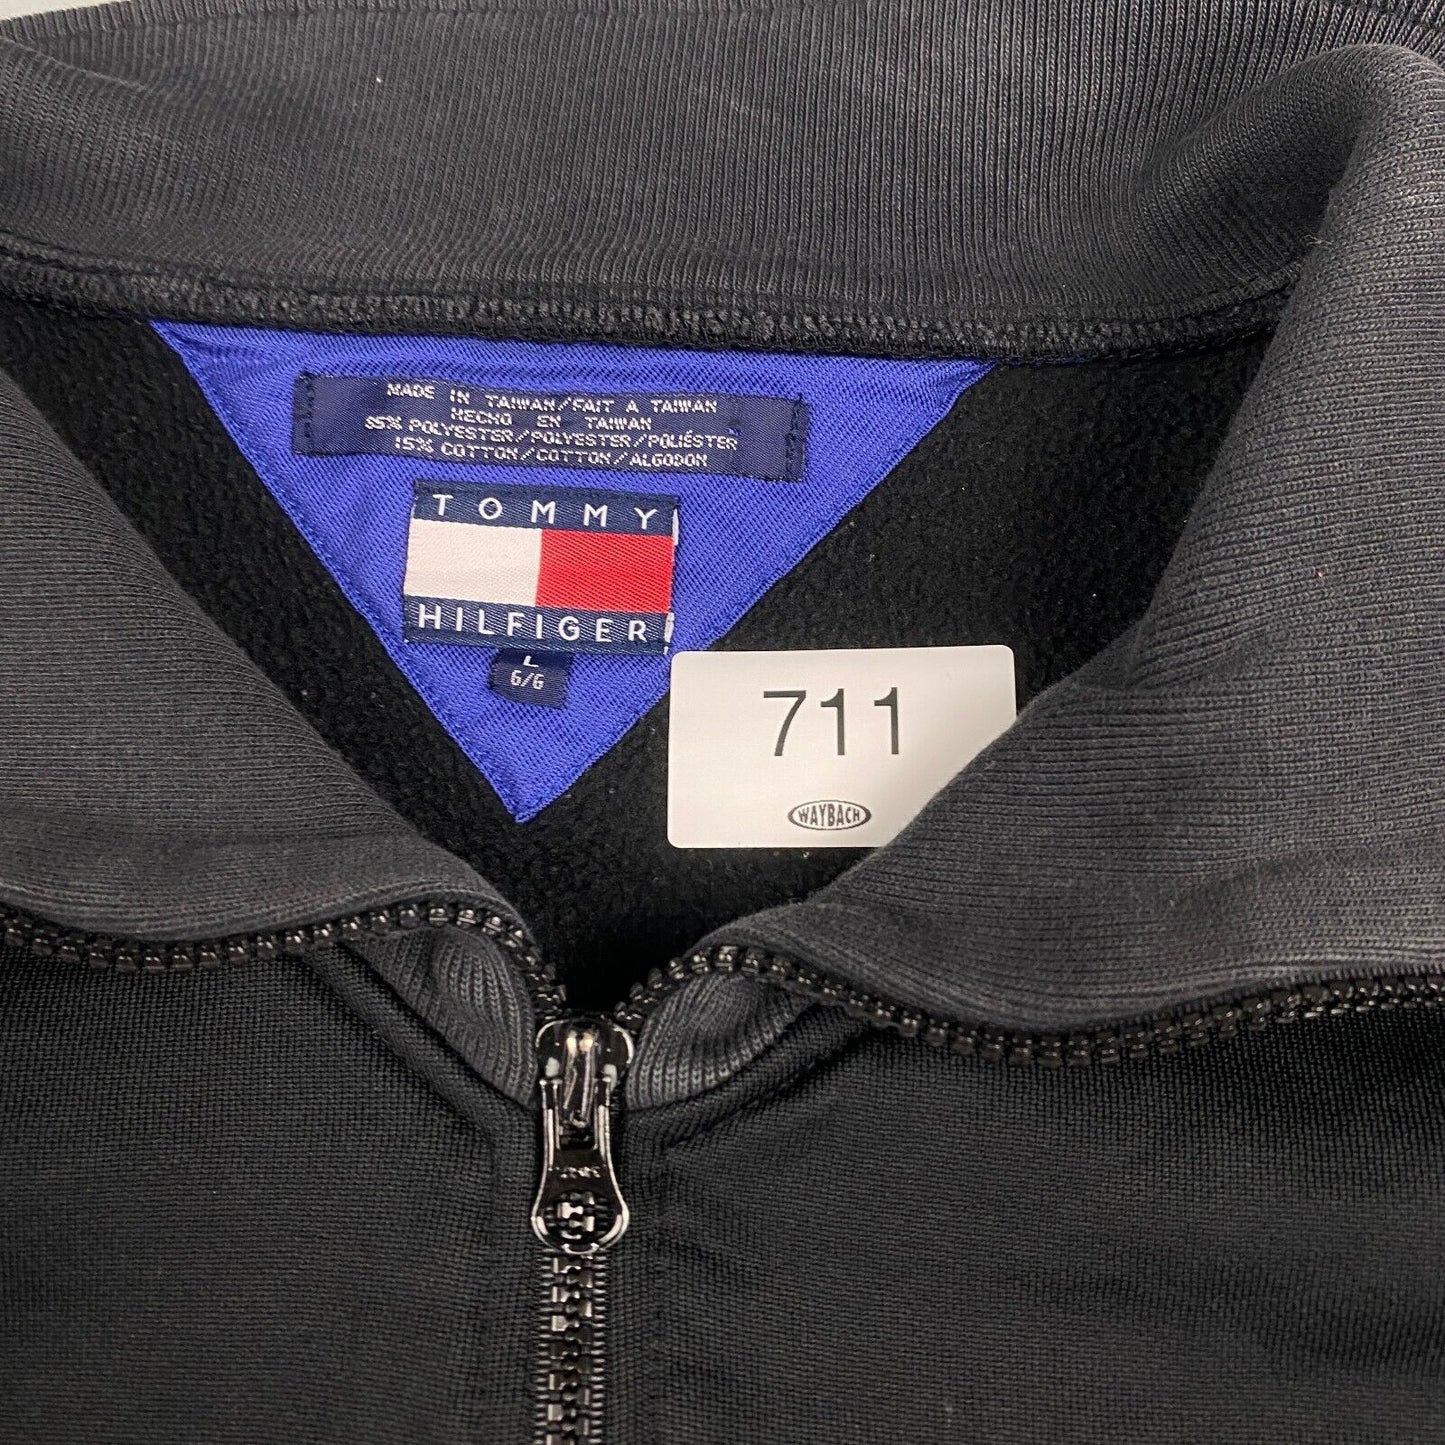 VINTAGE Tommy Hilfiger Athletic Gear Full Zip Black Sweater sz Large Mens Adult